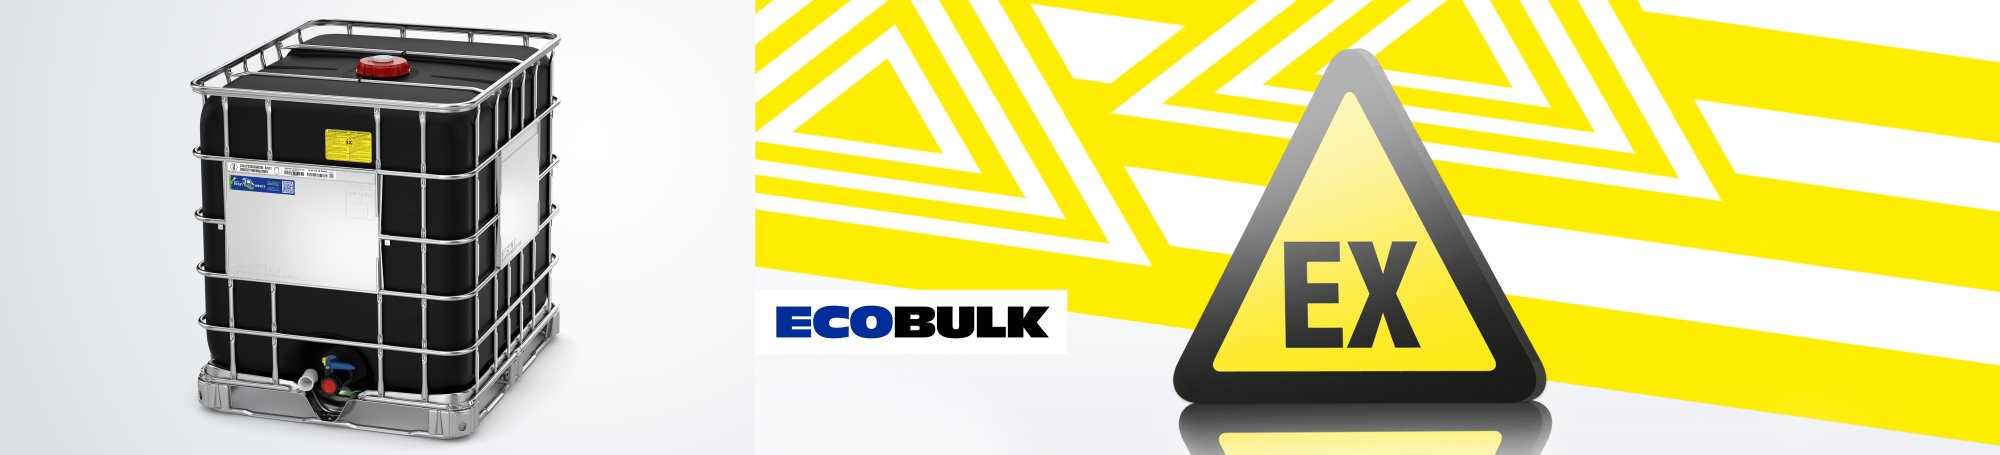 ECOBULK MX-EX conductive